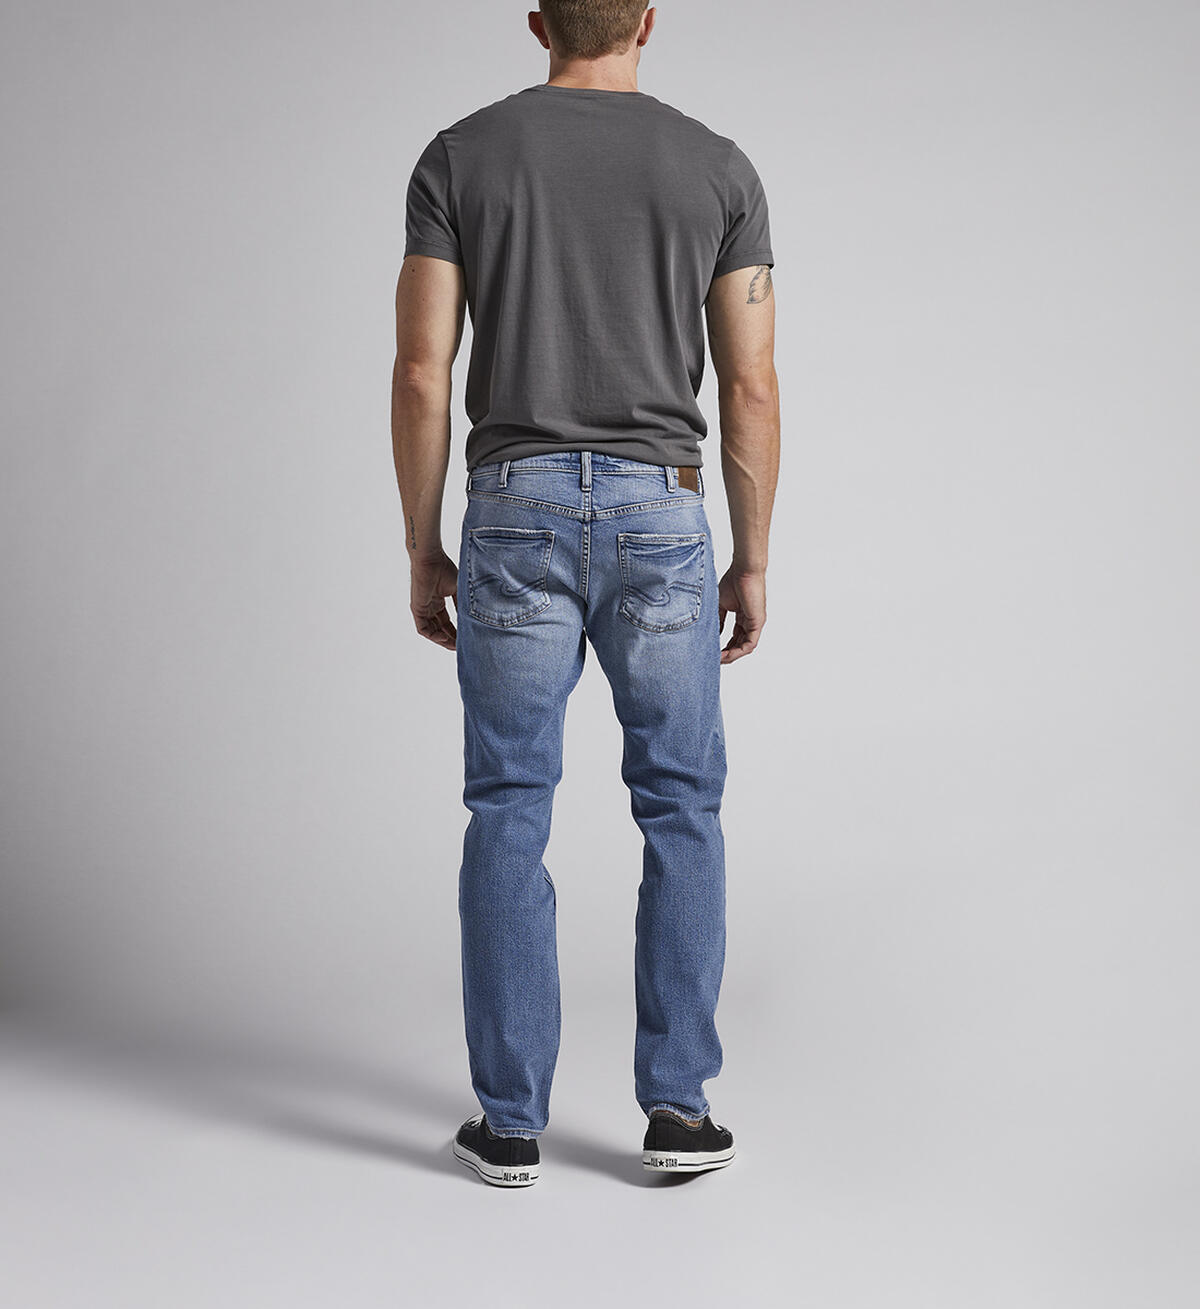 Taavi Skinny Fit Skinny Leg Jeans, Indigo, hi-res image number 1